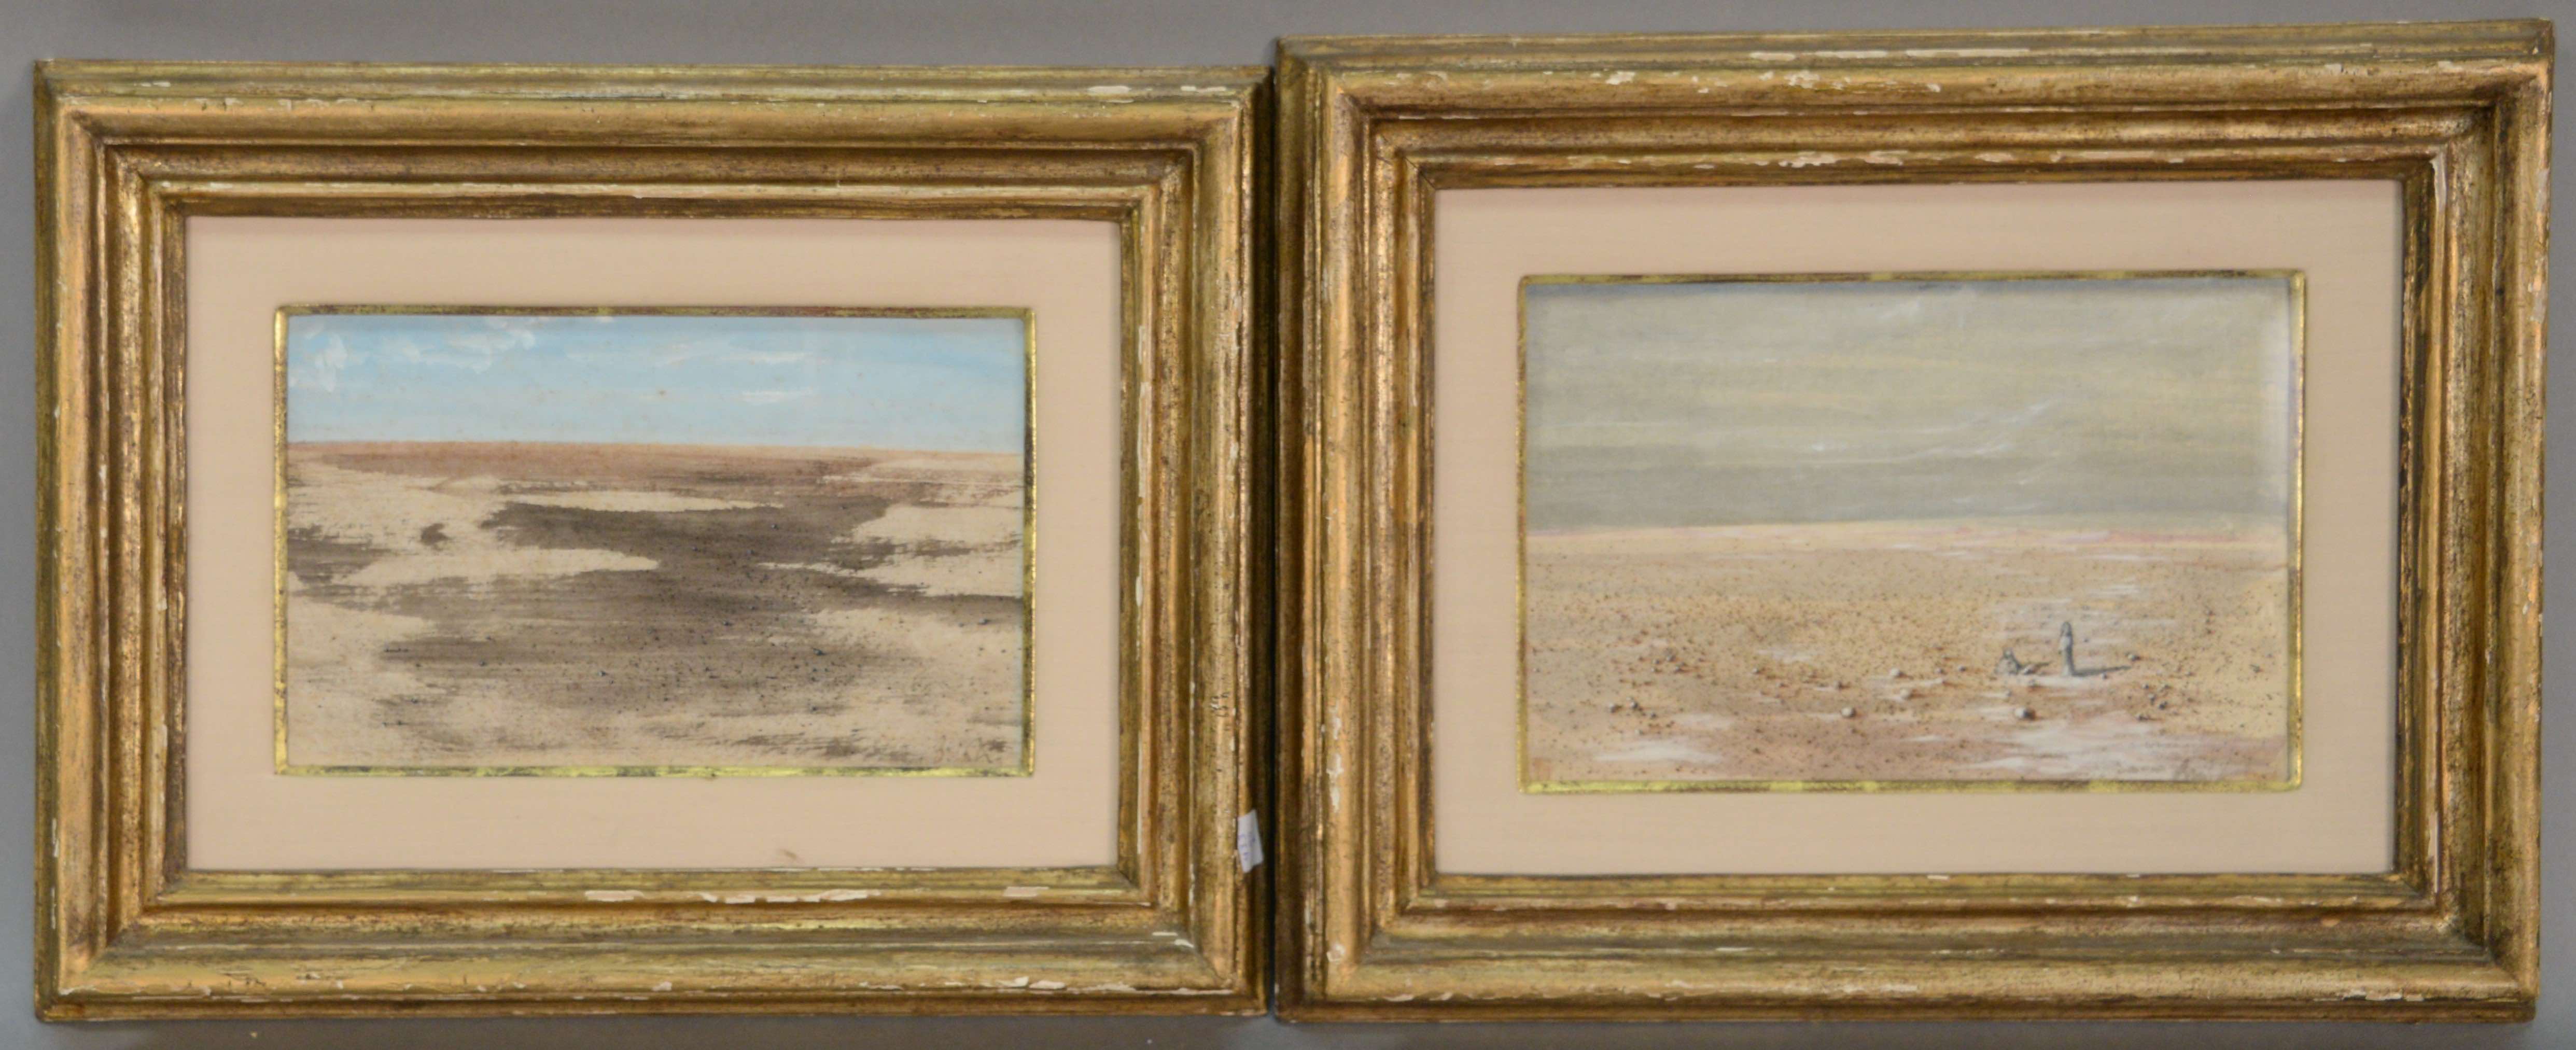 Pair of Brion Gysin (1916-1986) landscape watercolors, estimated at $2,000-4,000.